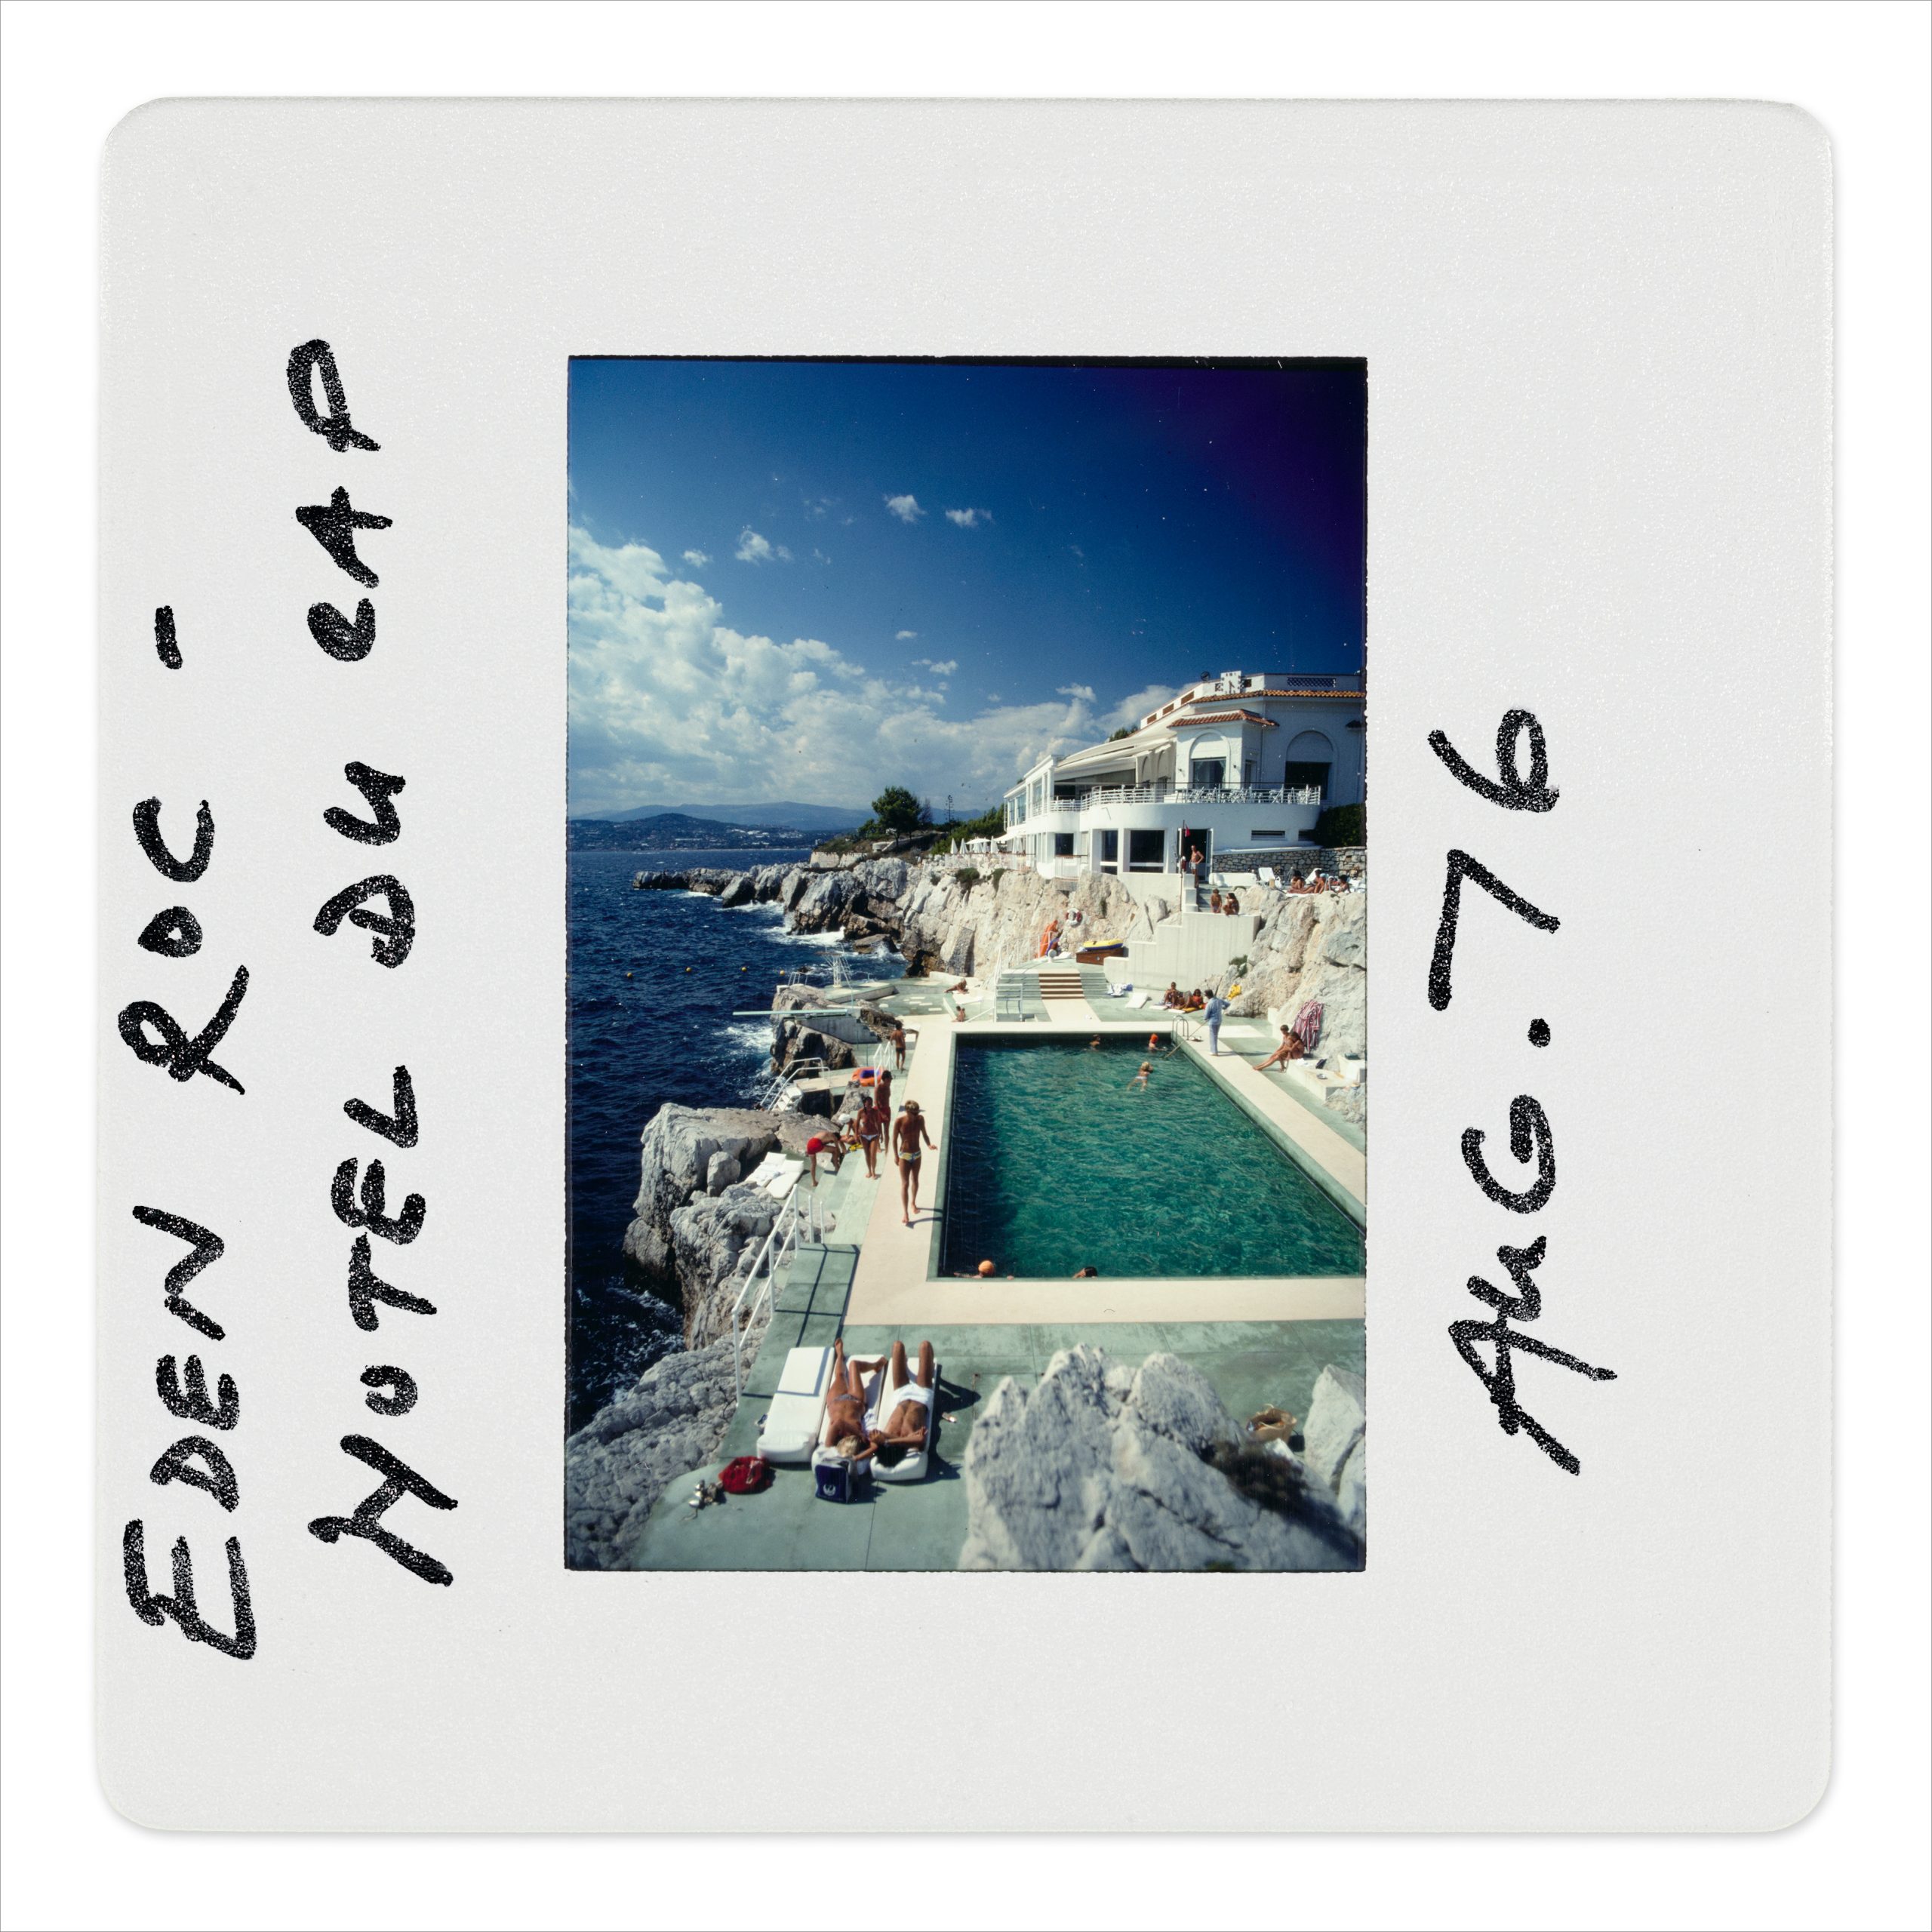 Hotel du Cap Eden-Roc – Slide fine art photography